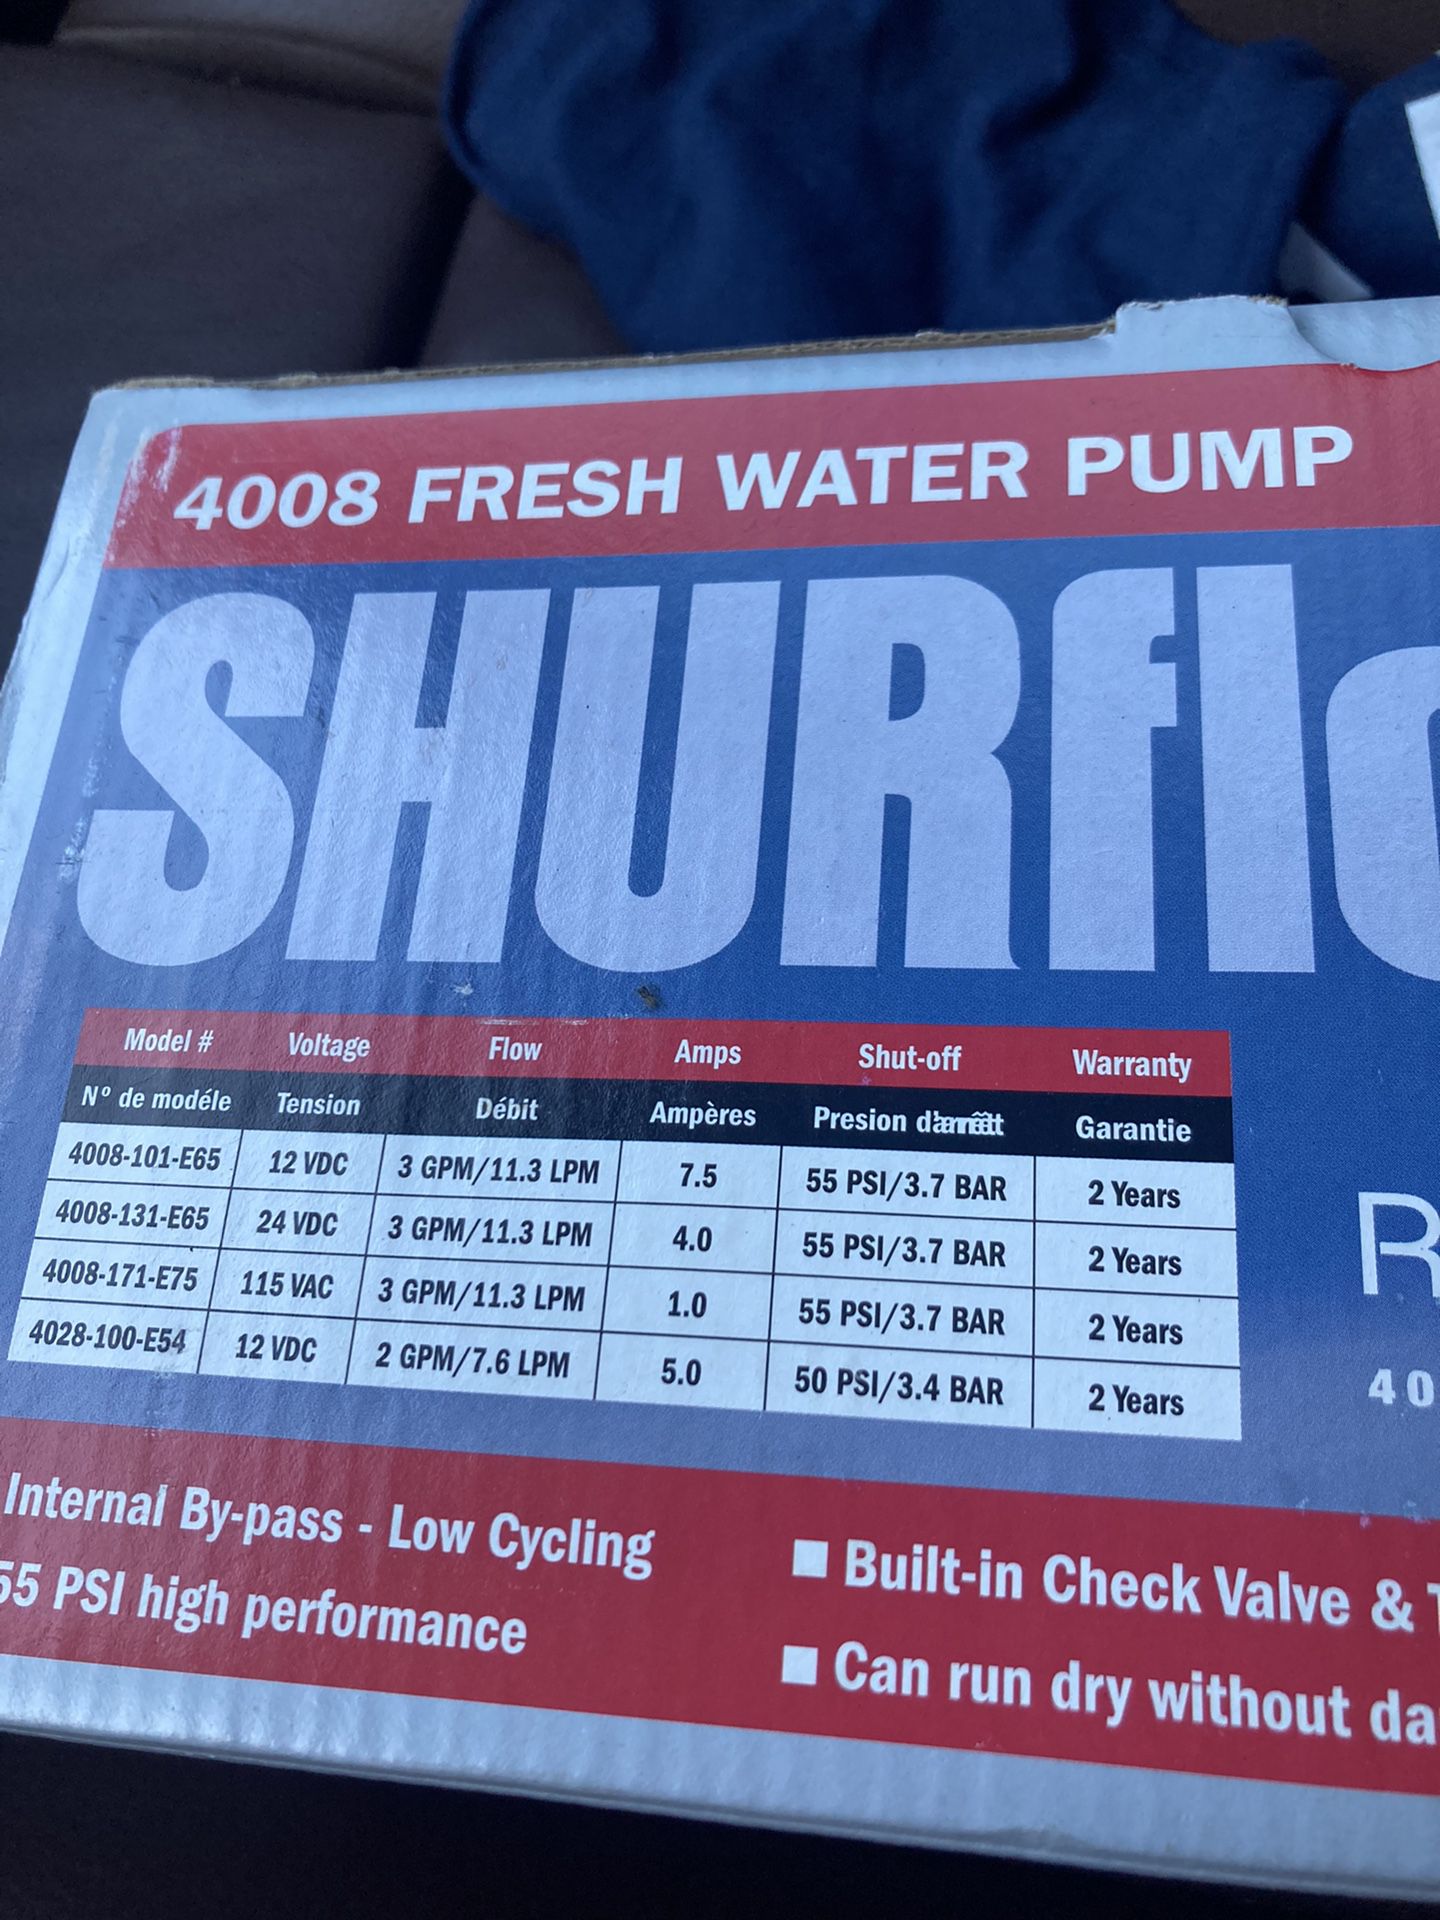 Shurflo Water Pump